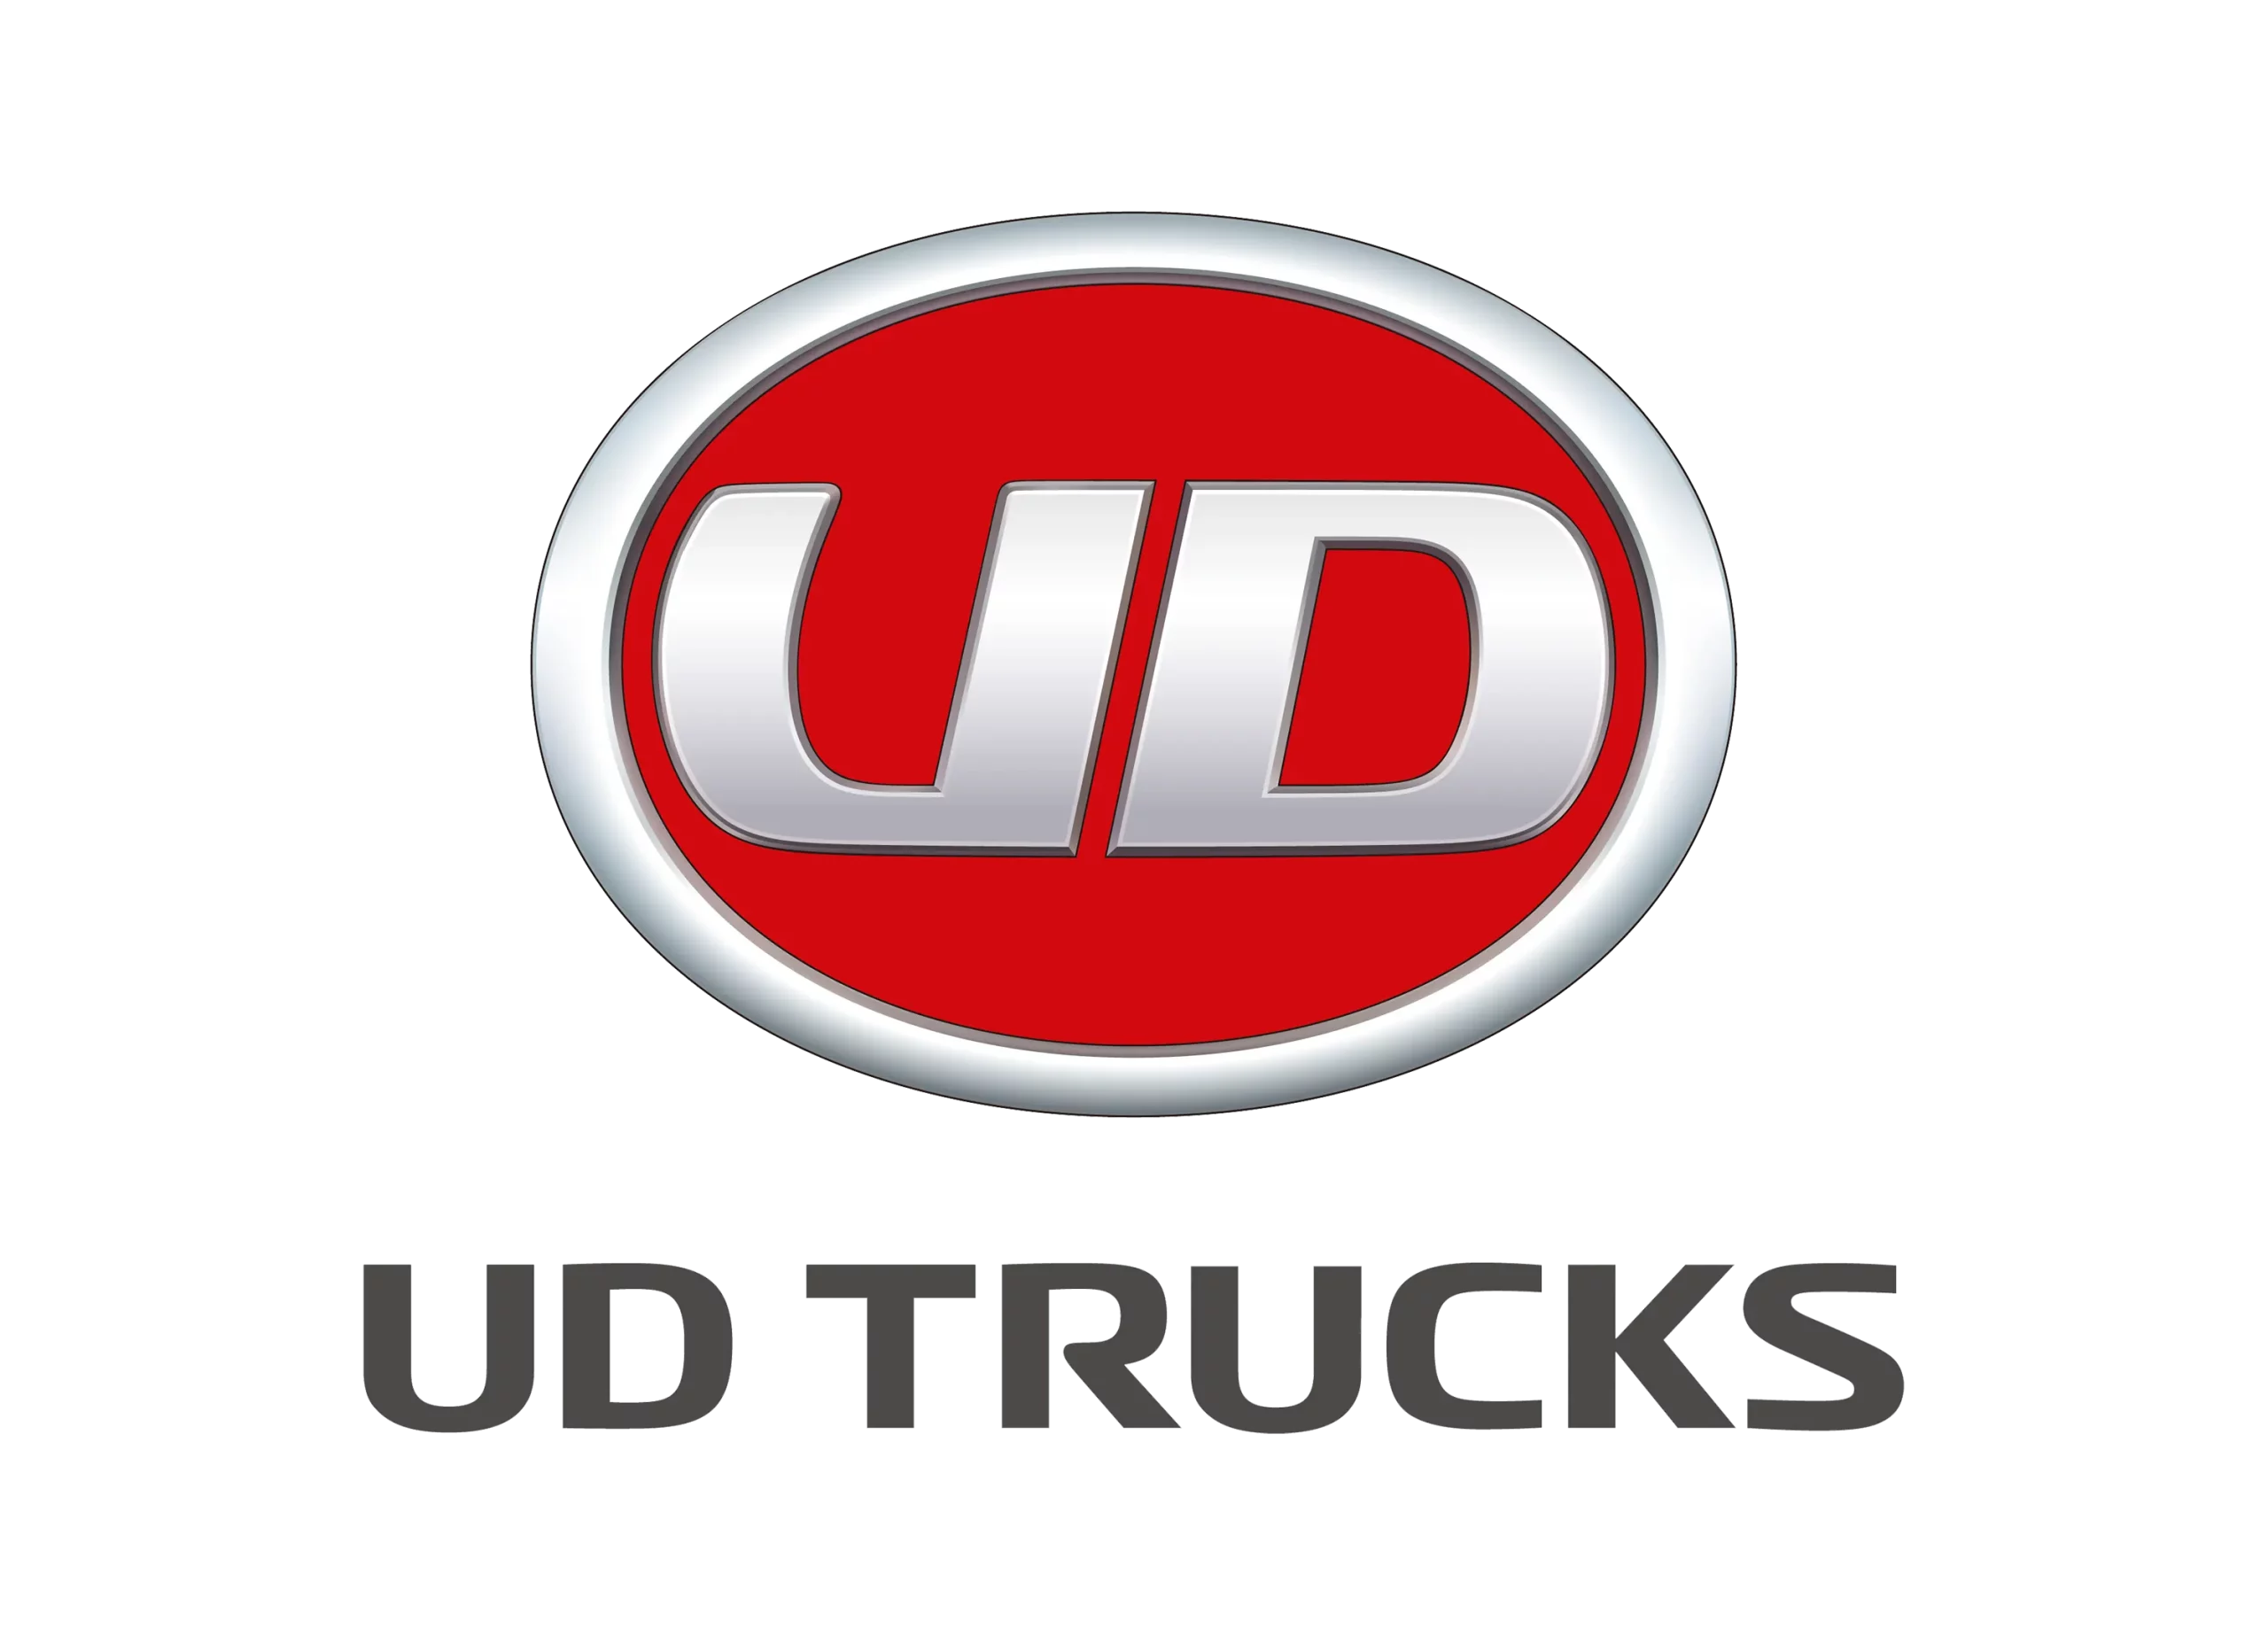 UD logo 2010-present